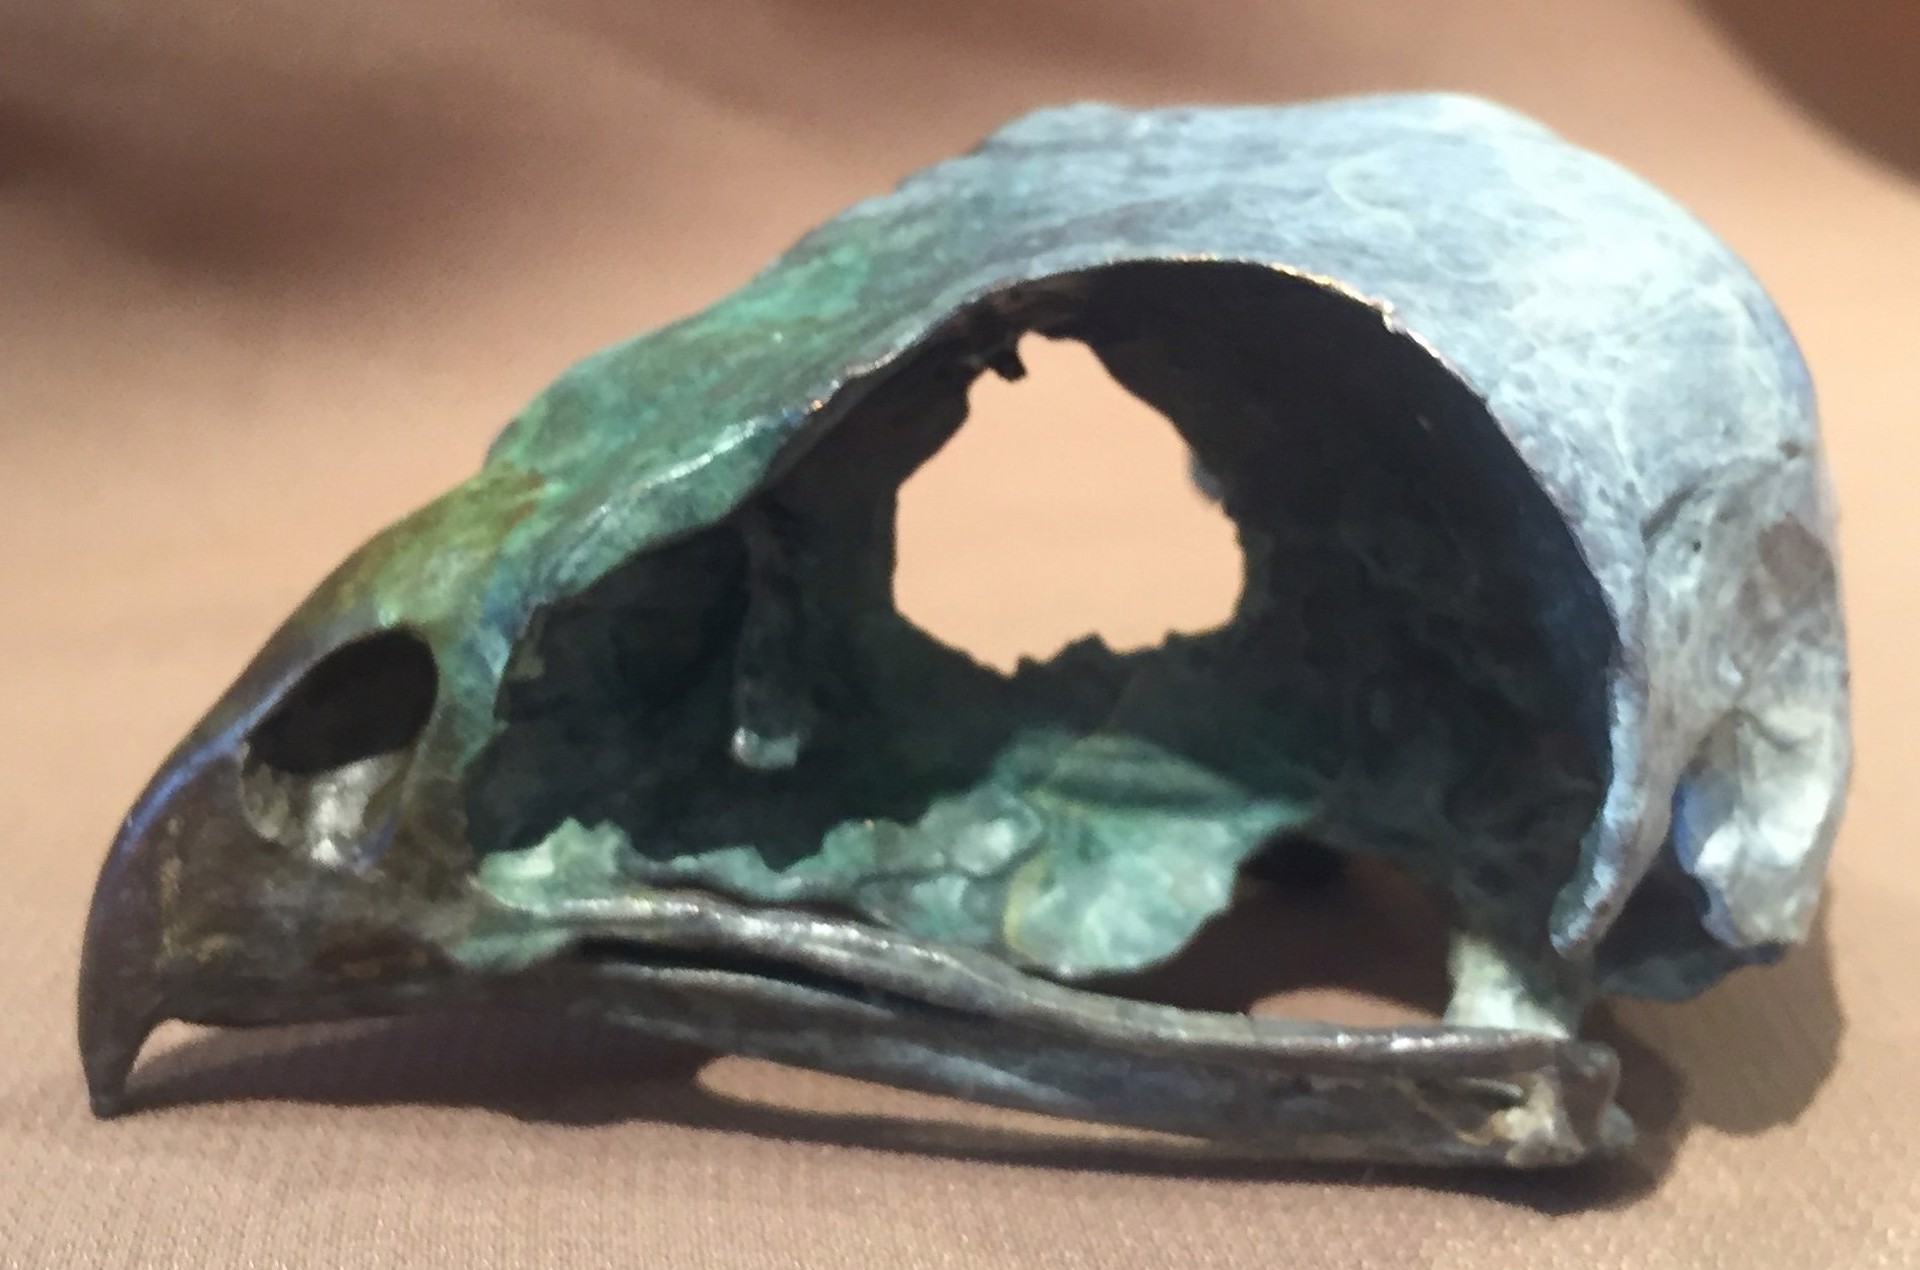 Red-tailed Hawk Skull by Dan Chen